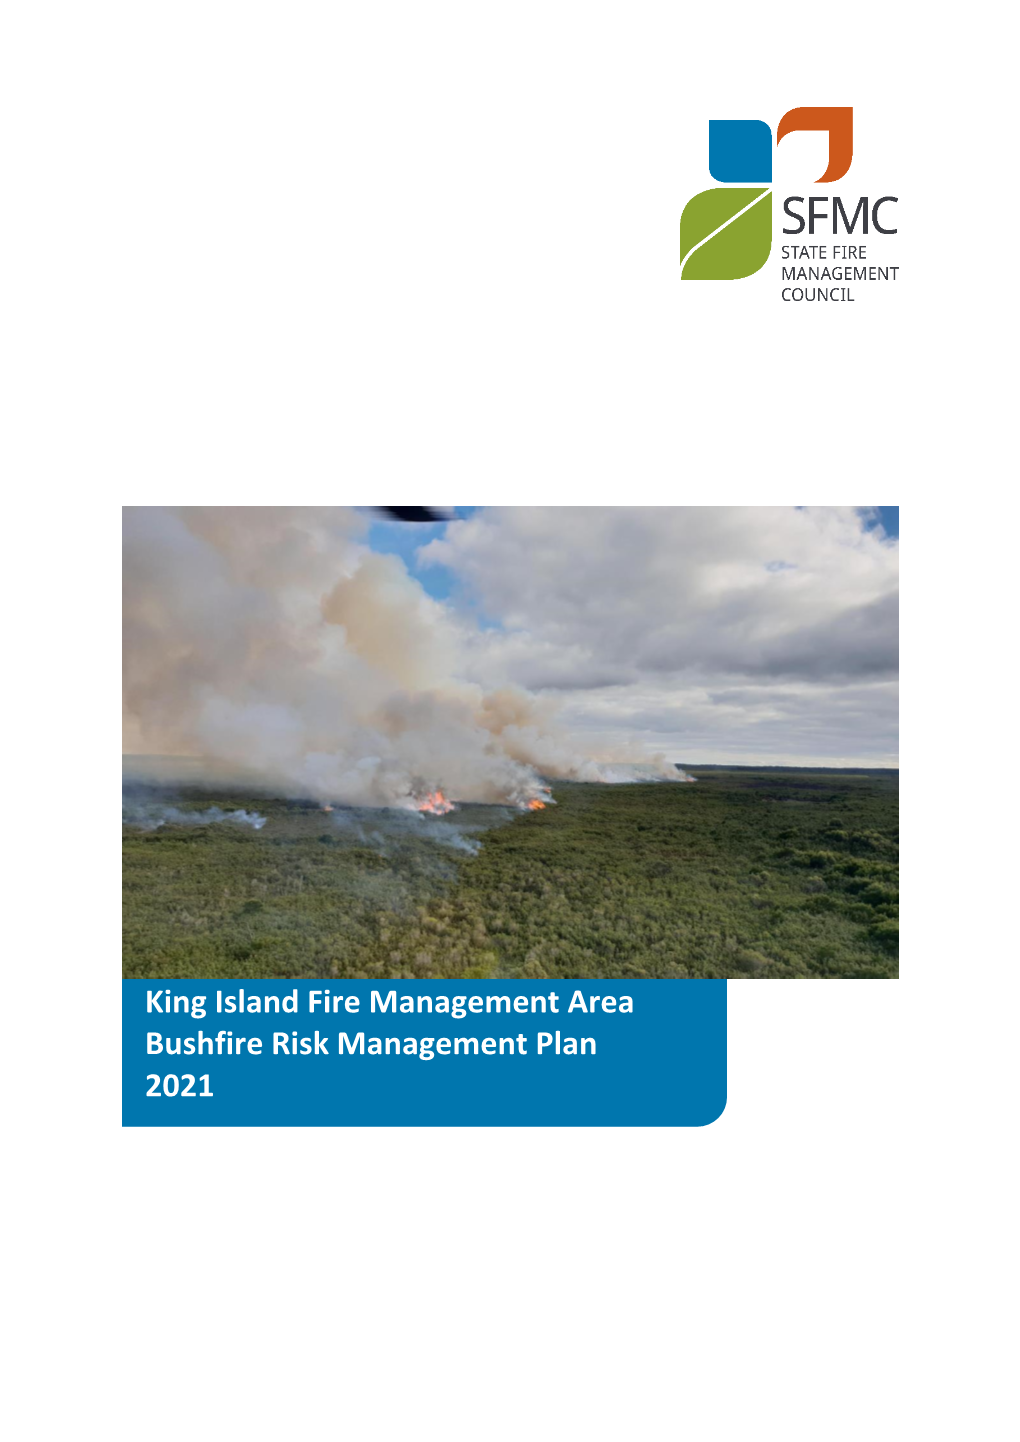 King Island Fire Management Area Bushfire Risk Management Plan 2021